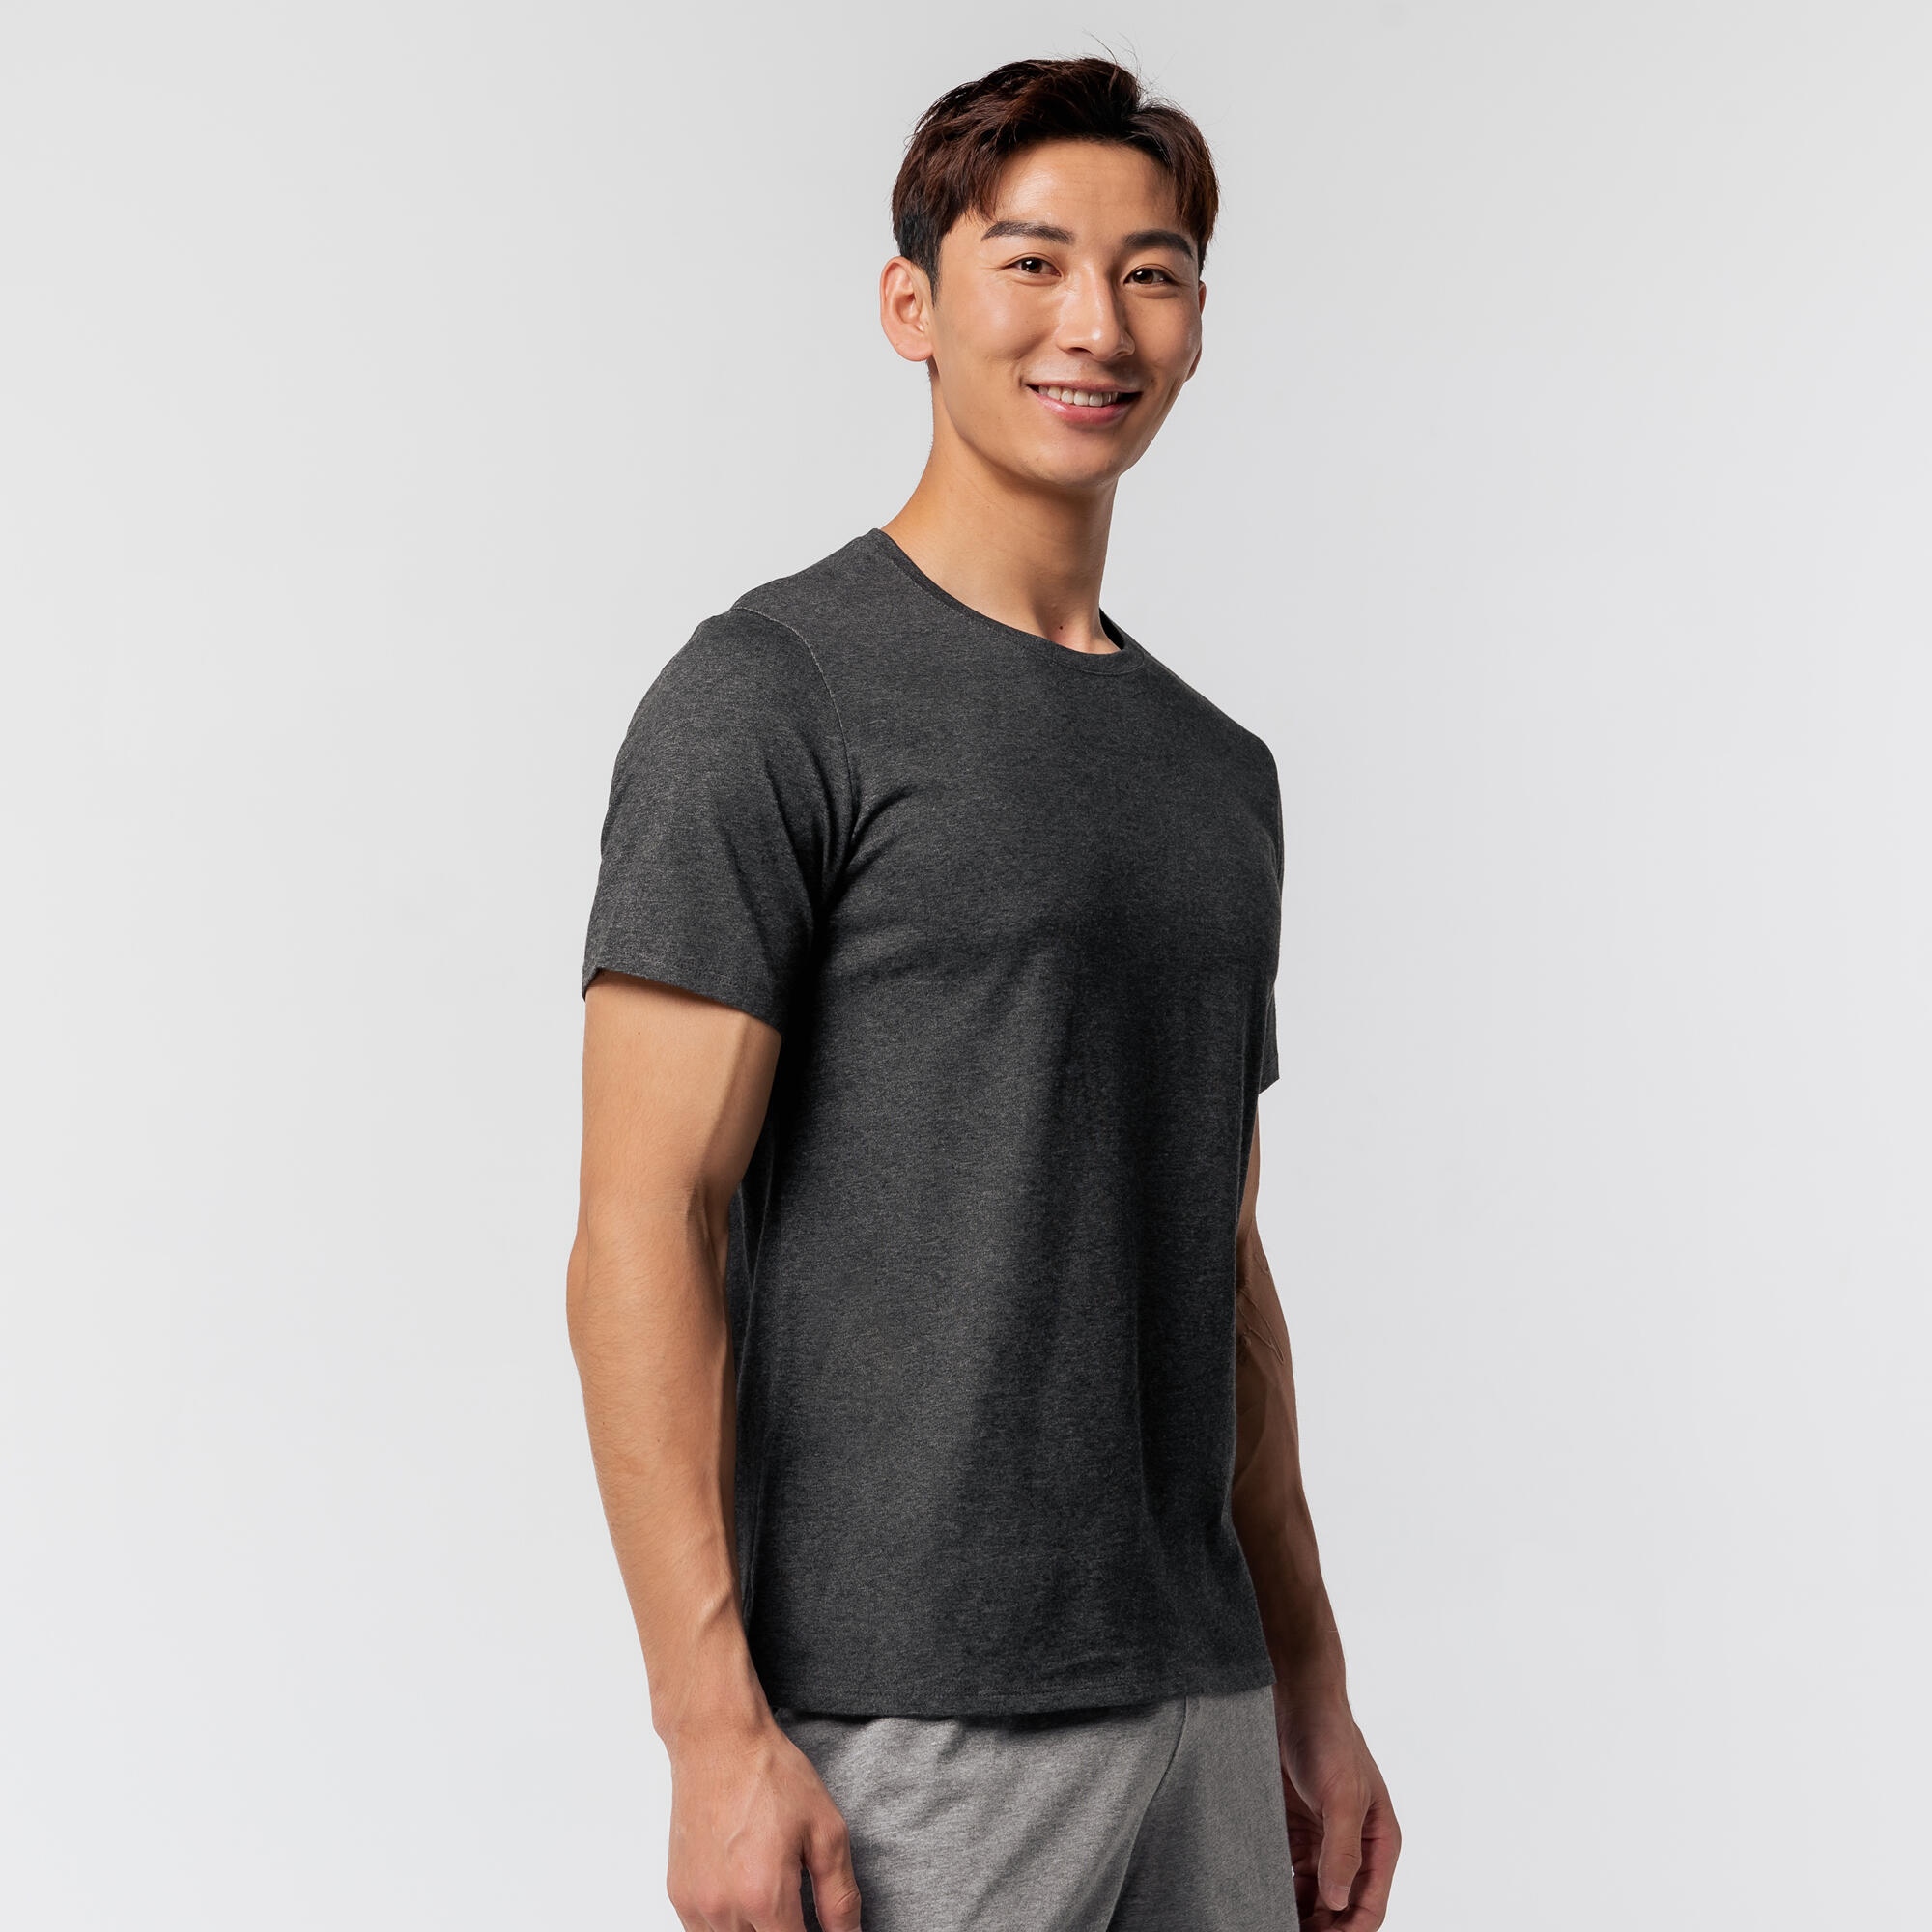 Men's Short-Sleeved Straight-Cut Crew Neck Cotton Fitness T-Shirt 500 - Grey 12/21